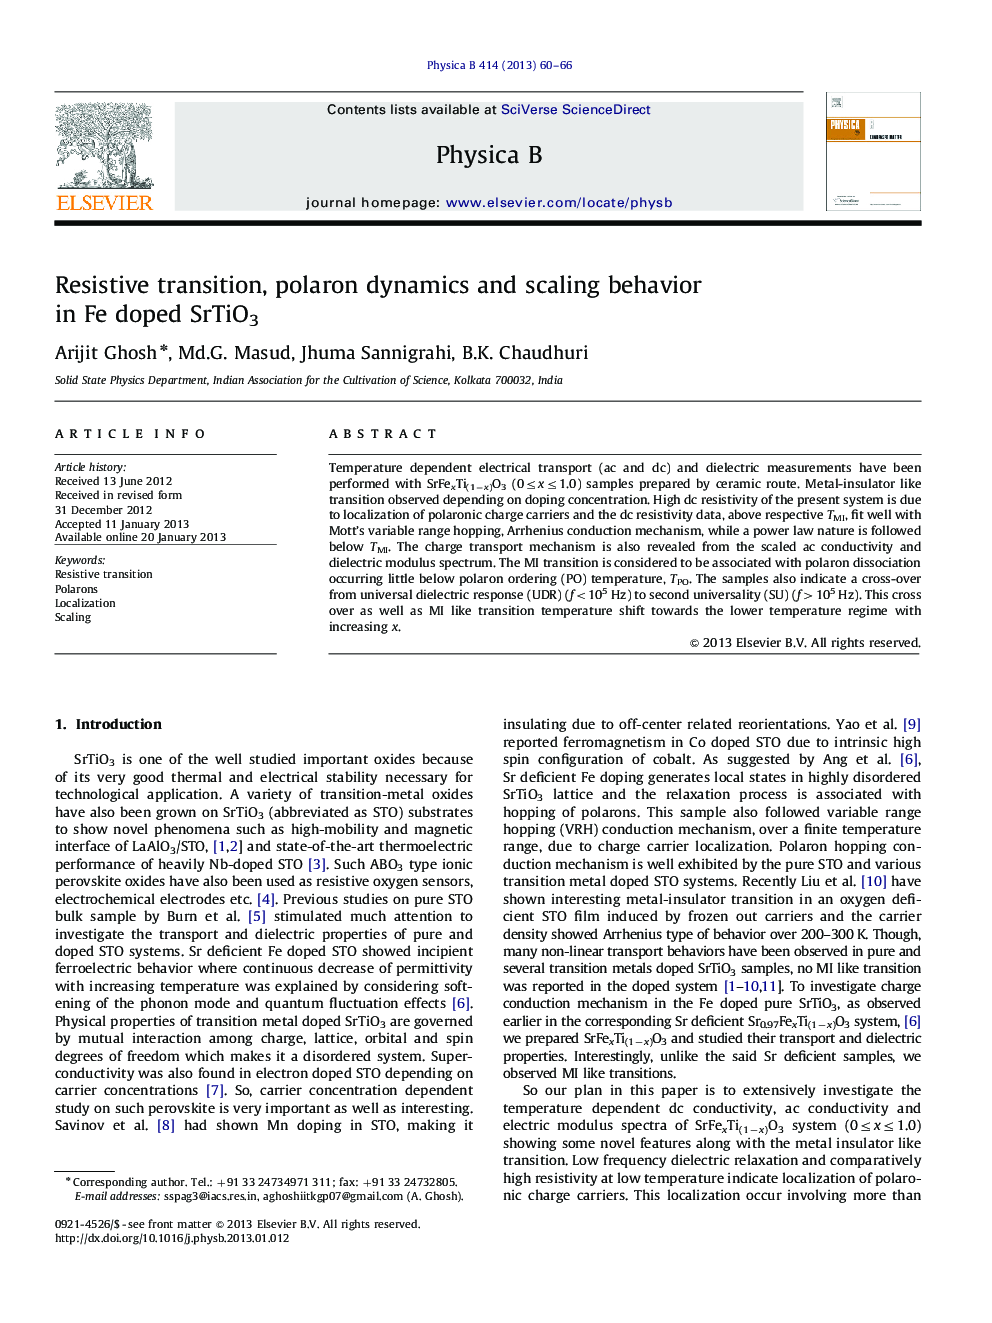 Resistive transition, polaron dynamics and scaling behavior in Fe doped SrTiO3